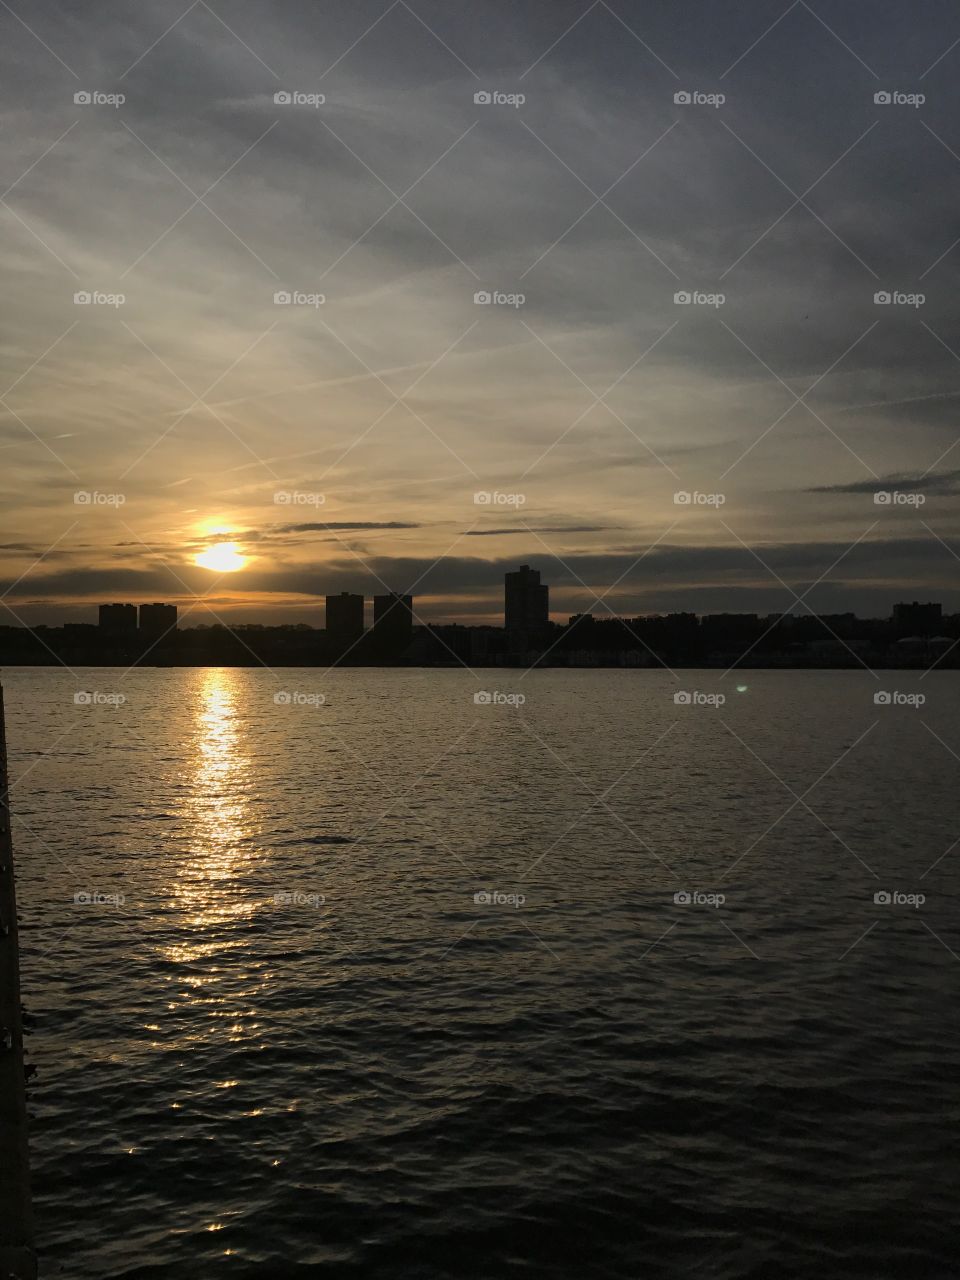 Sunset on the Hudson River